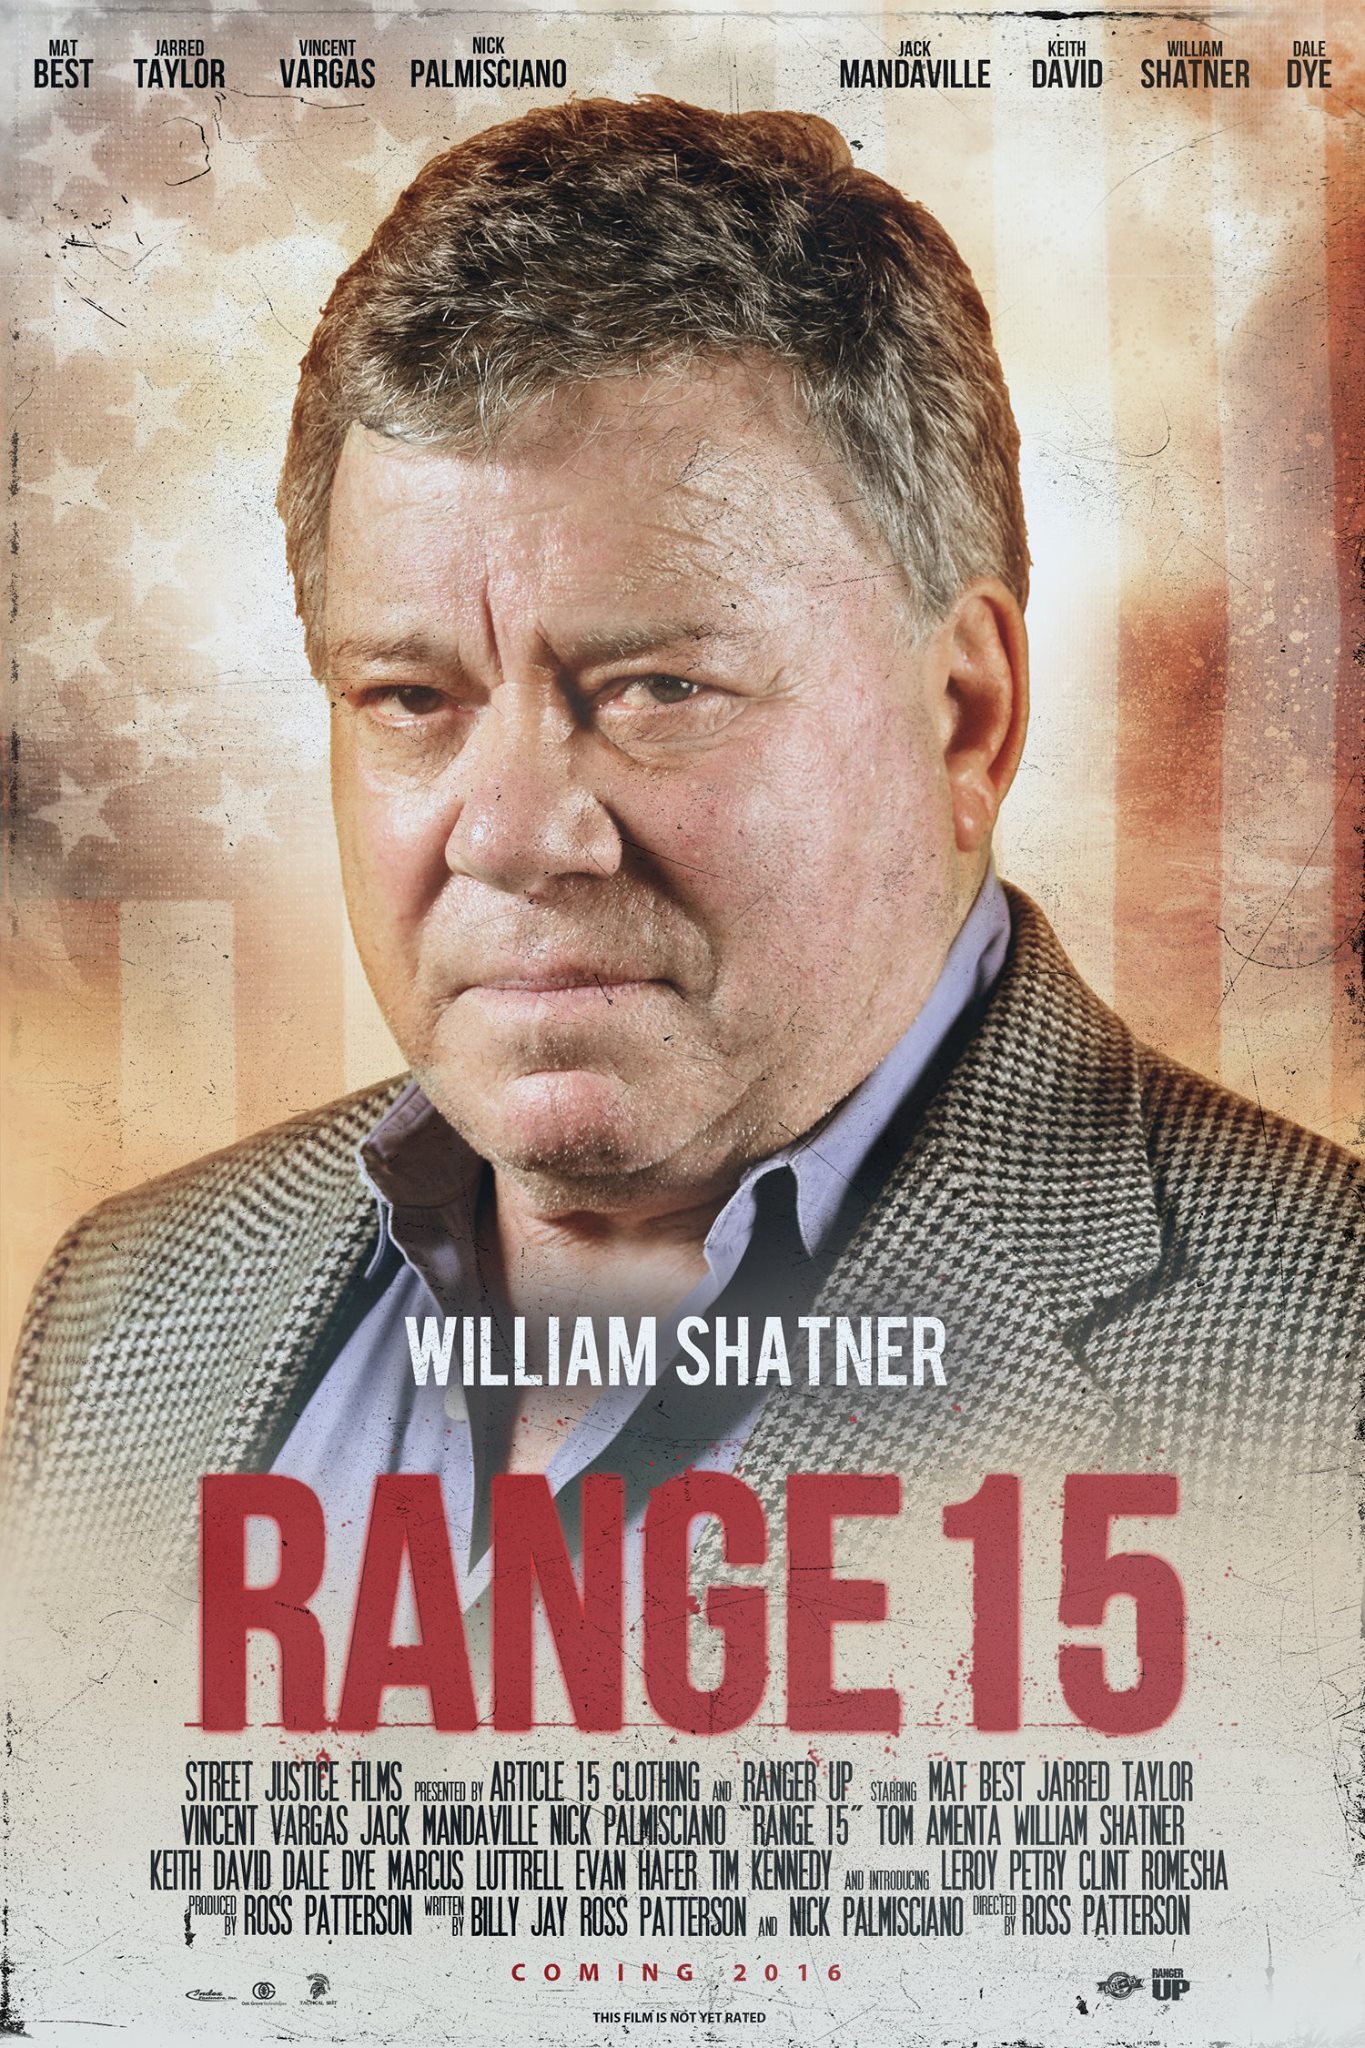 #Range15 the Movie, Starring William Shatner